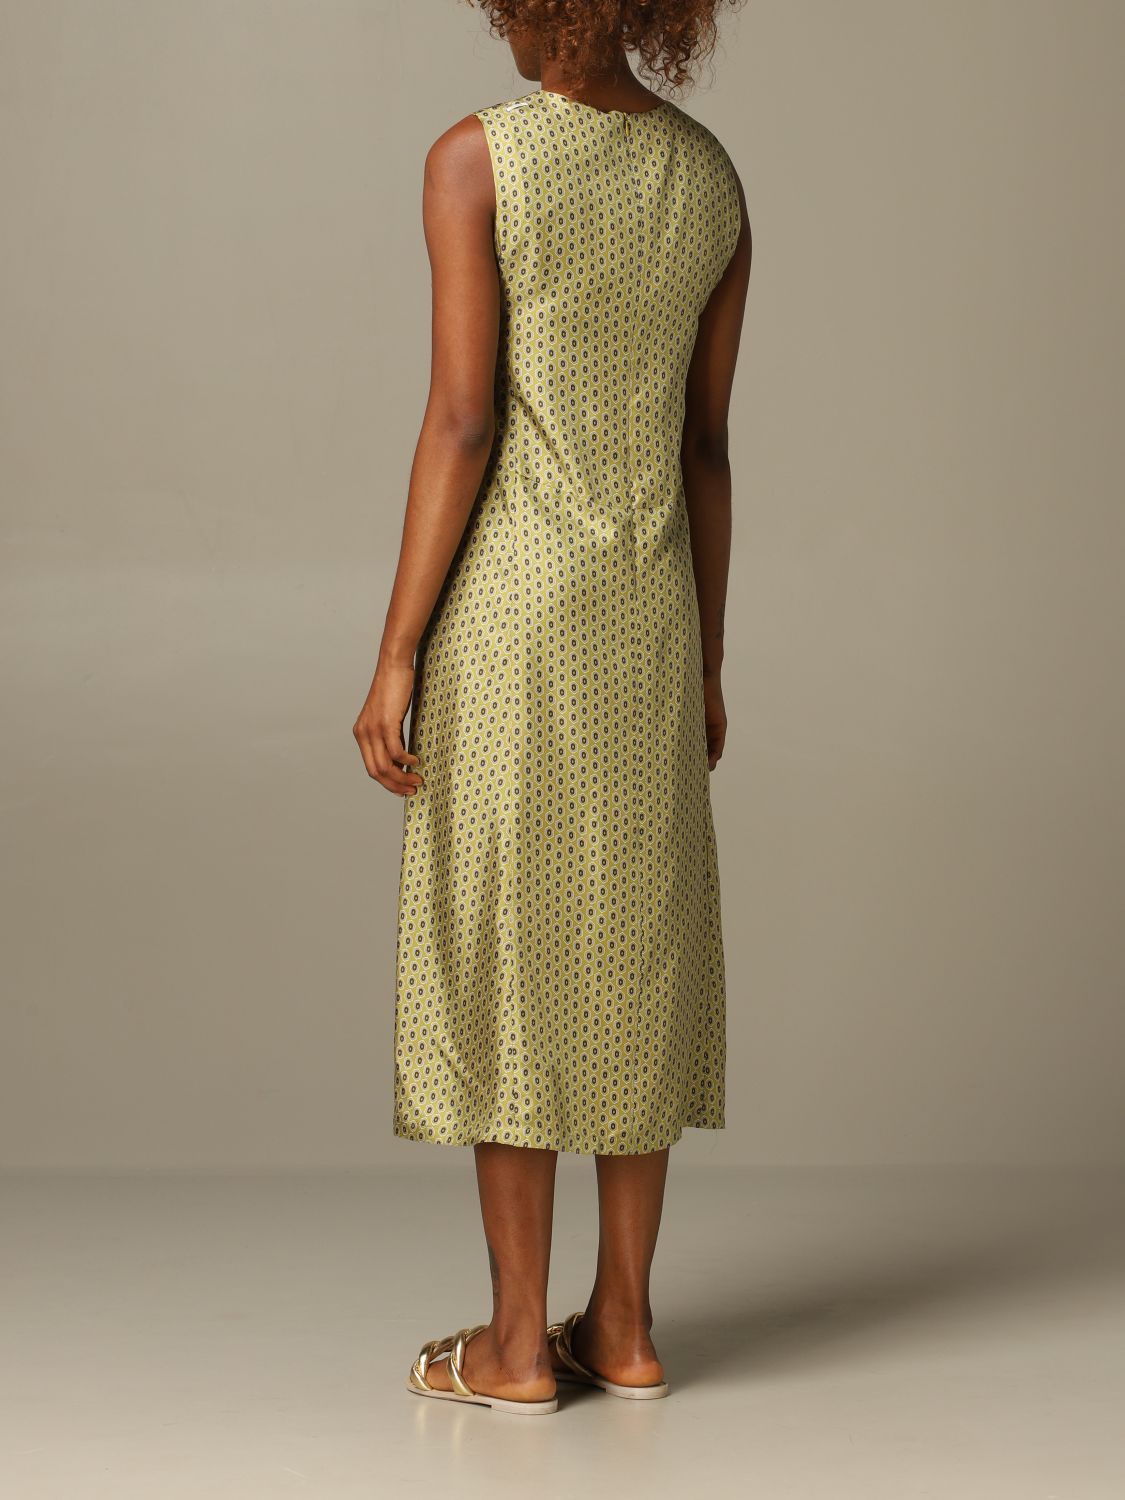 S MAX MARA: patterned dress - Fa01 | Dress S Max Mara 92210902600 ...